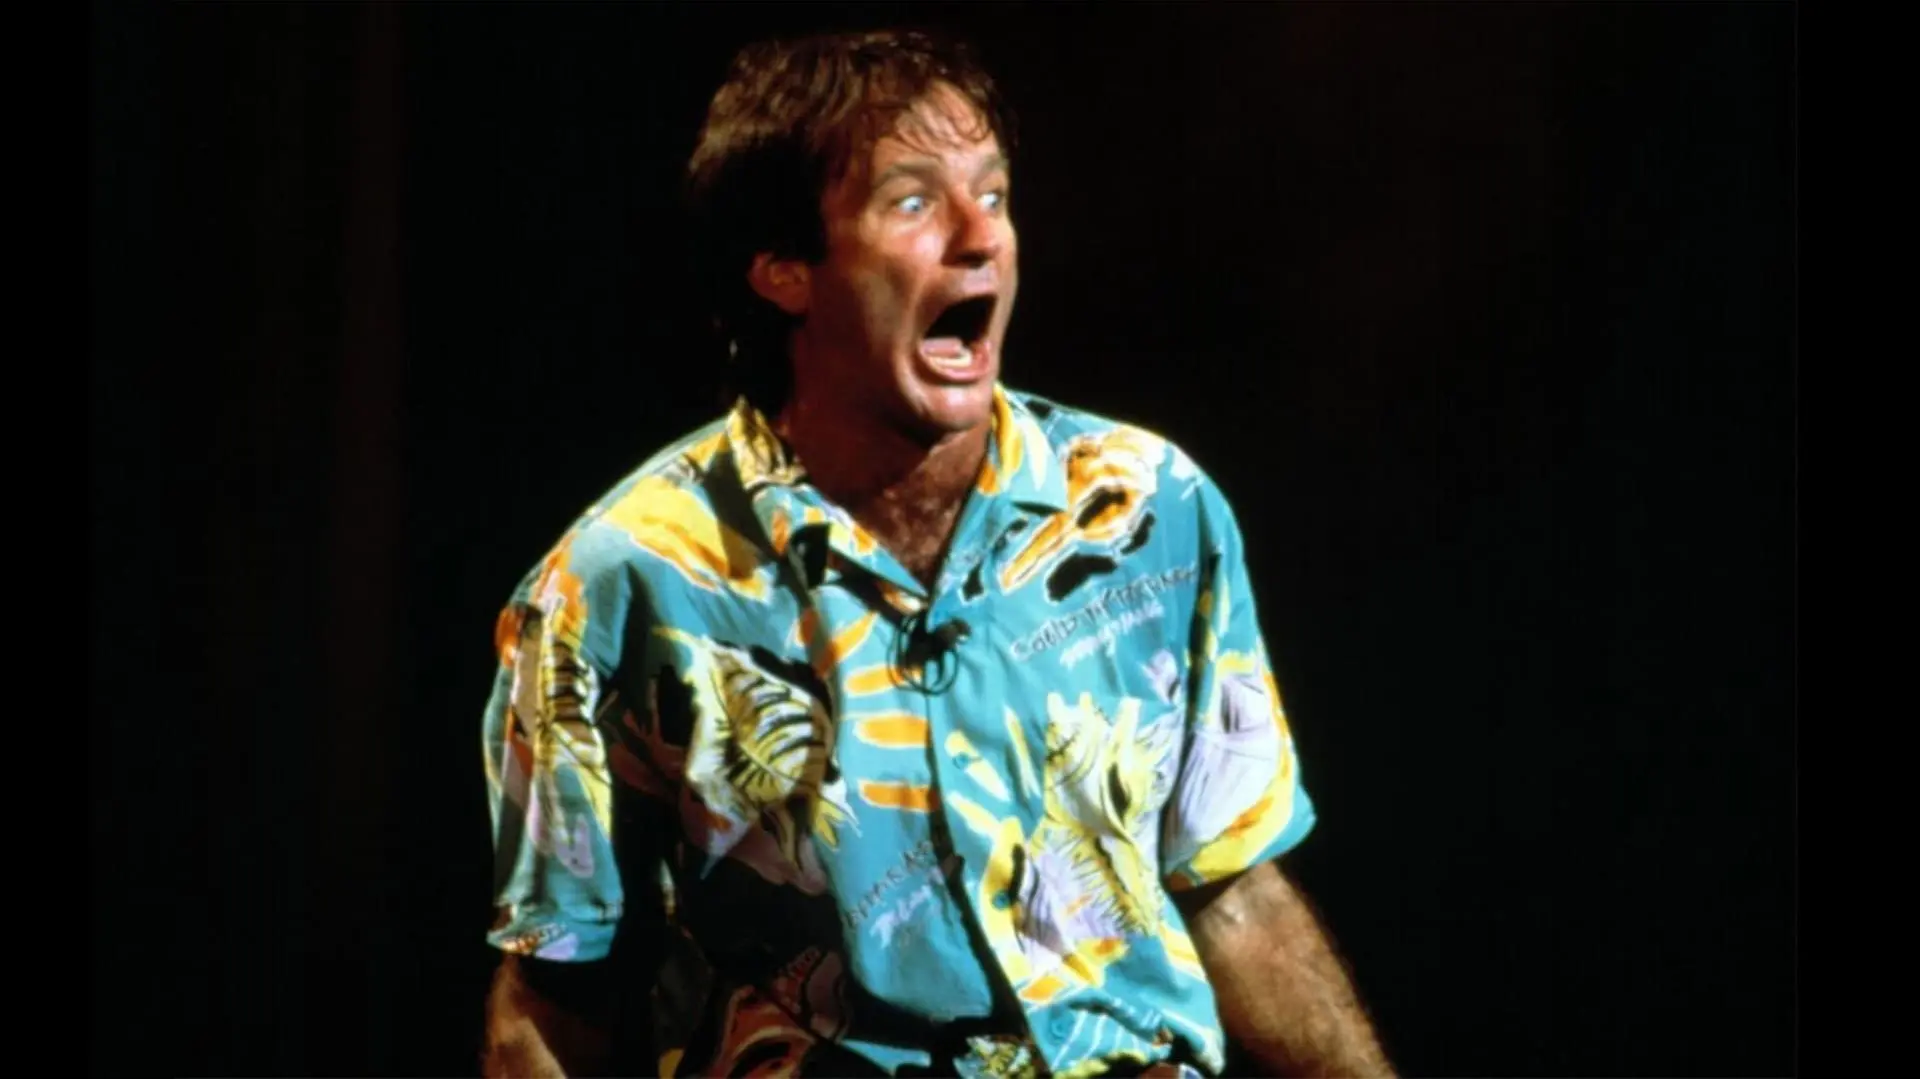 Robin Williams: An Evening at the Met_peliplat